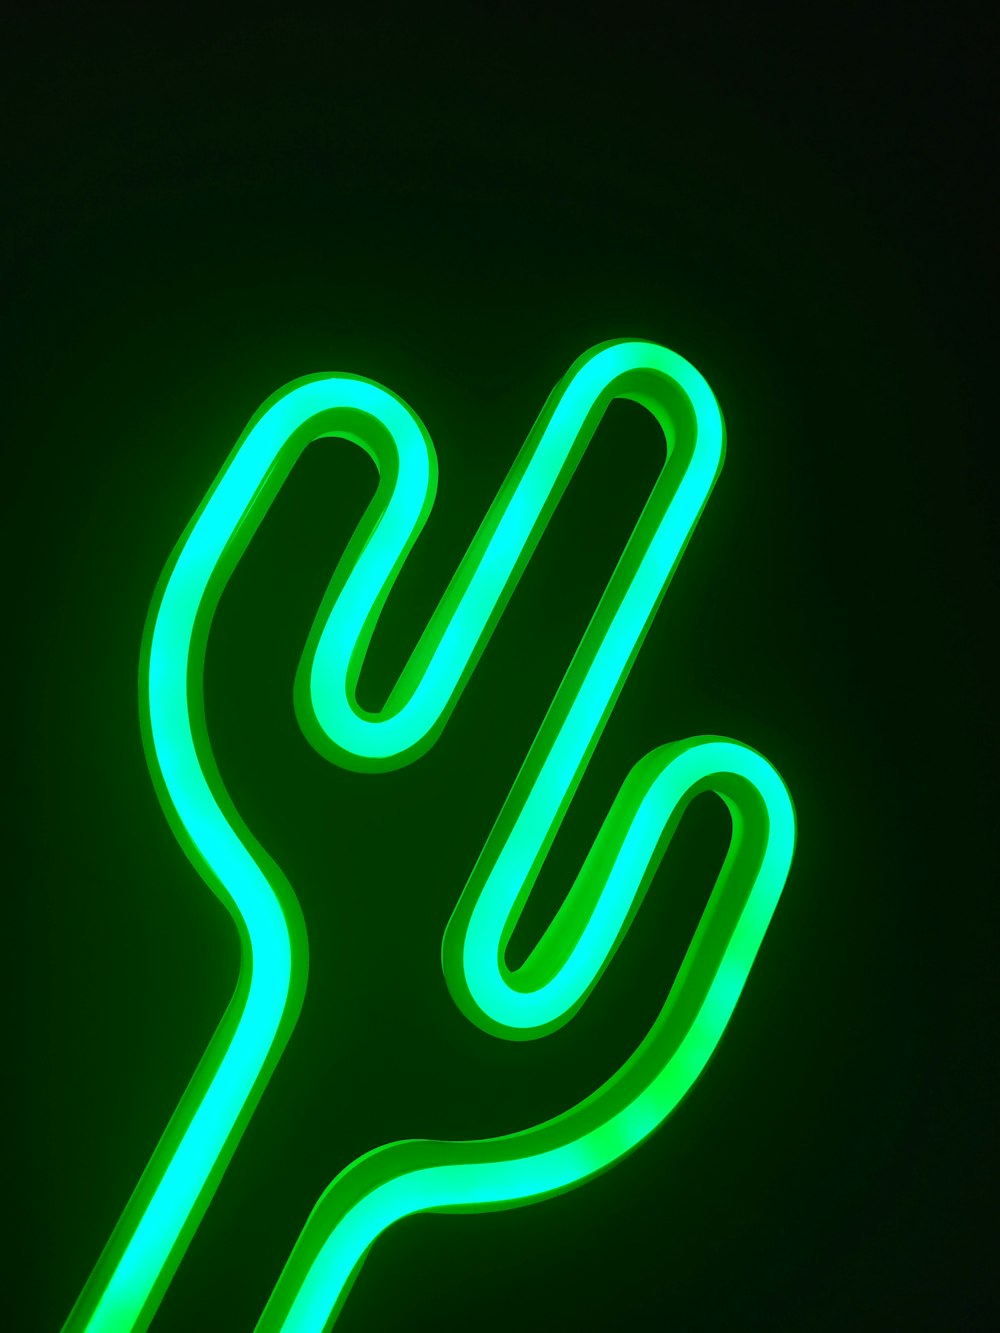 Signalisation lumineuse au néon vert